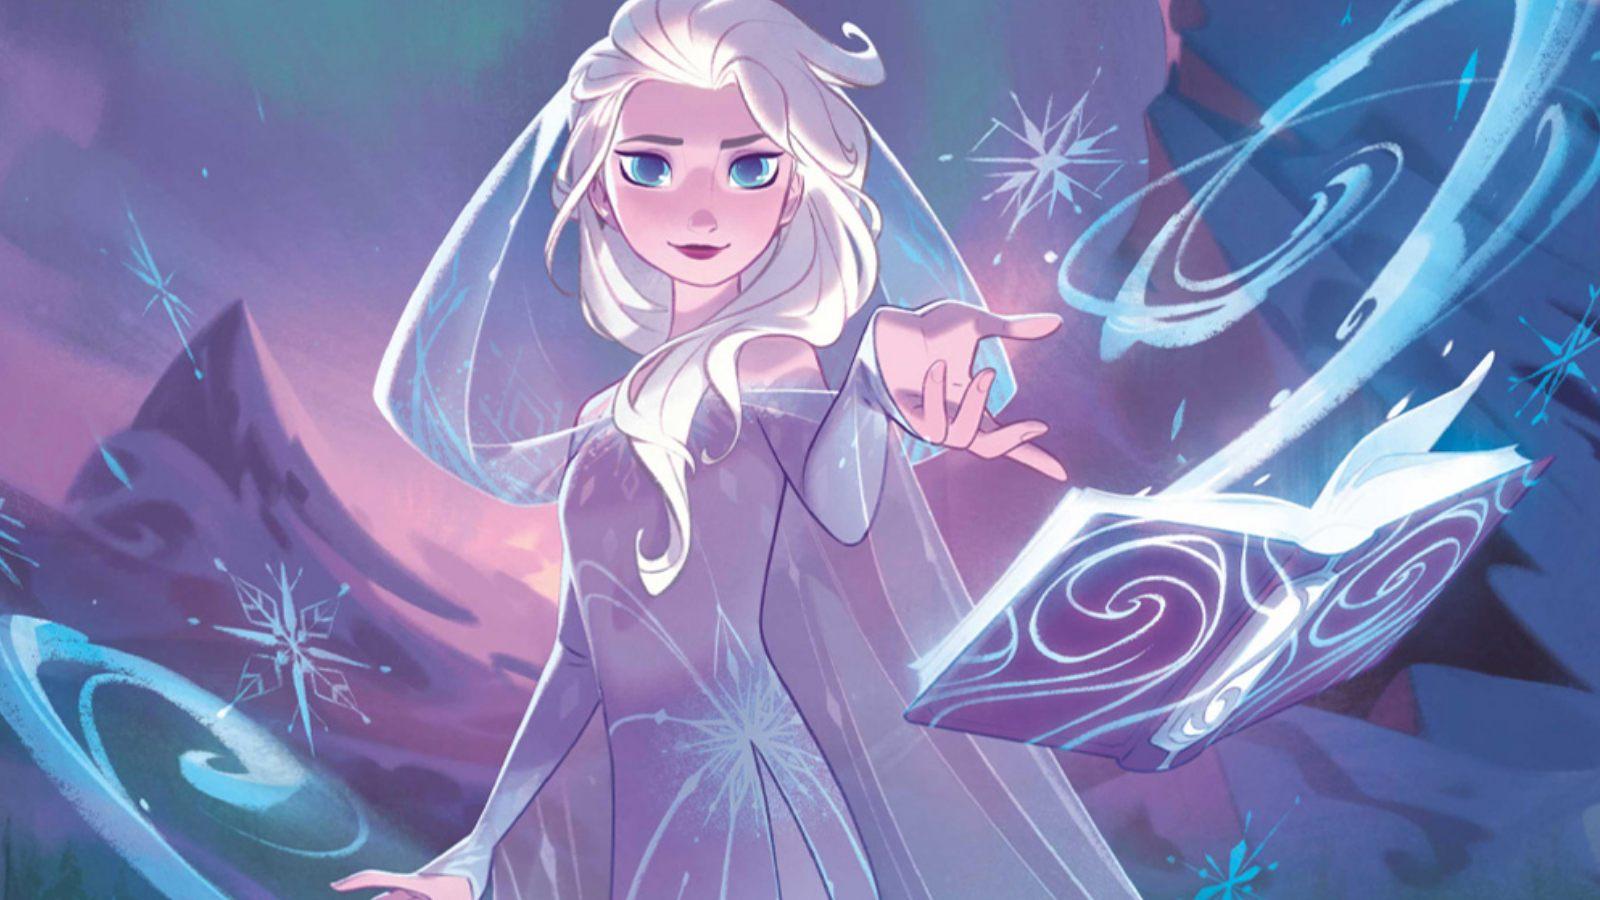 Disney Lorcana Frozen card featuring Elsa sells for over $7000